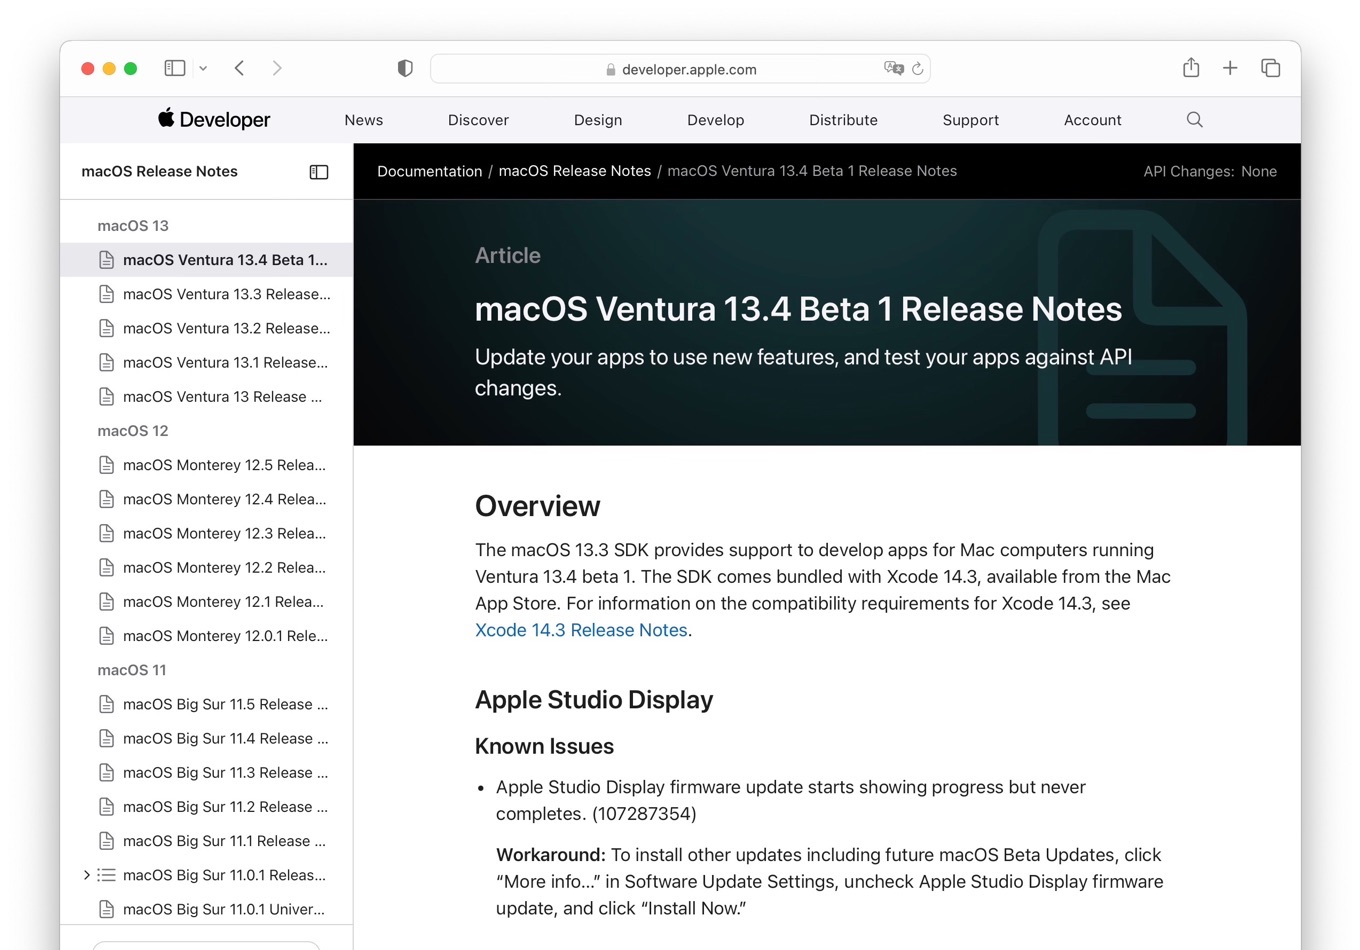 macOS Ventura 13.4 Beta 1 Release Notes